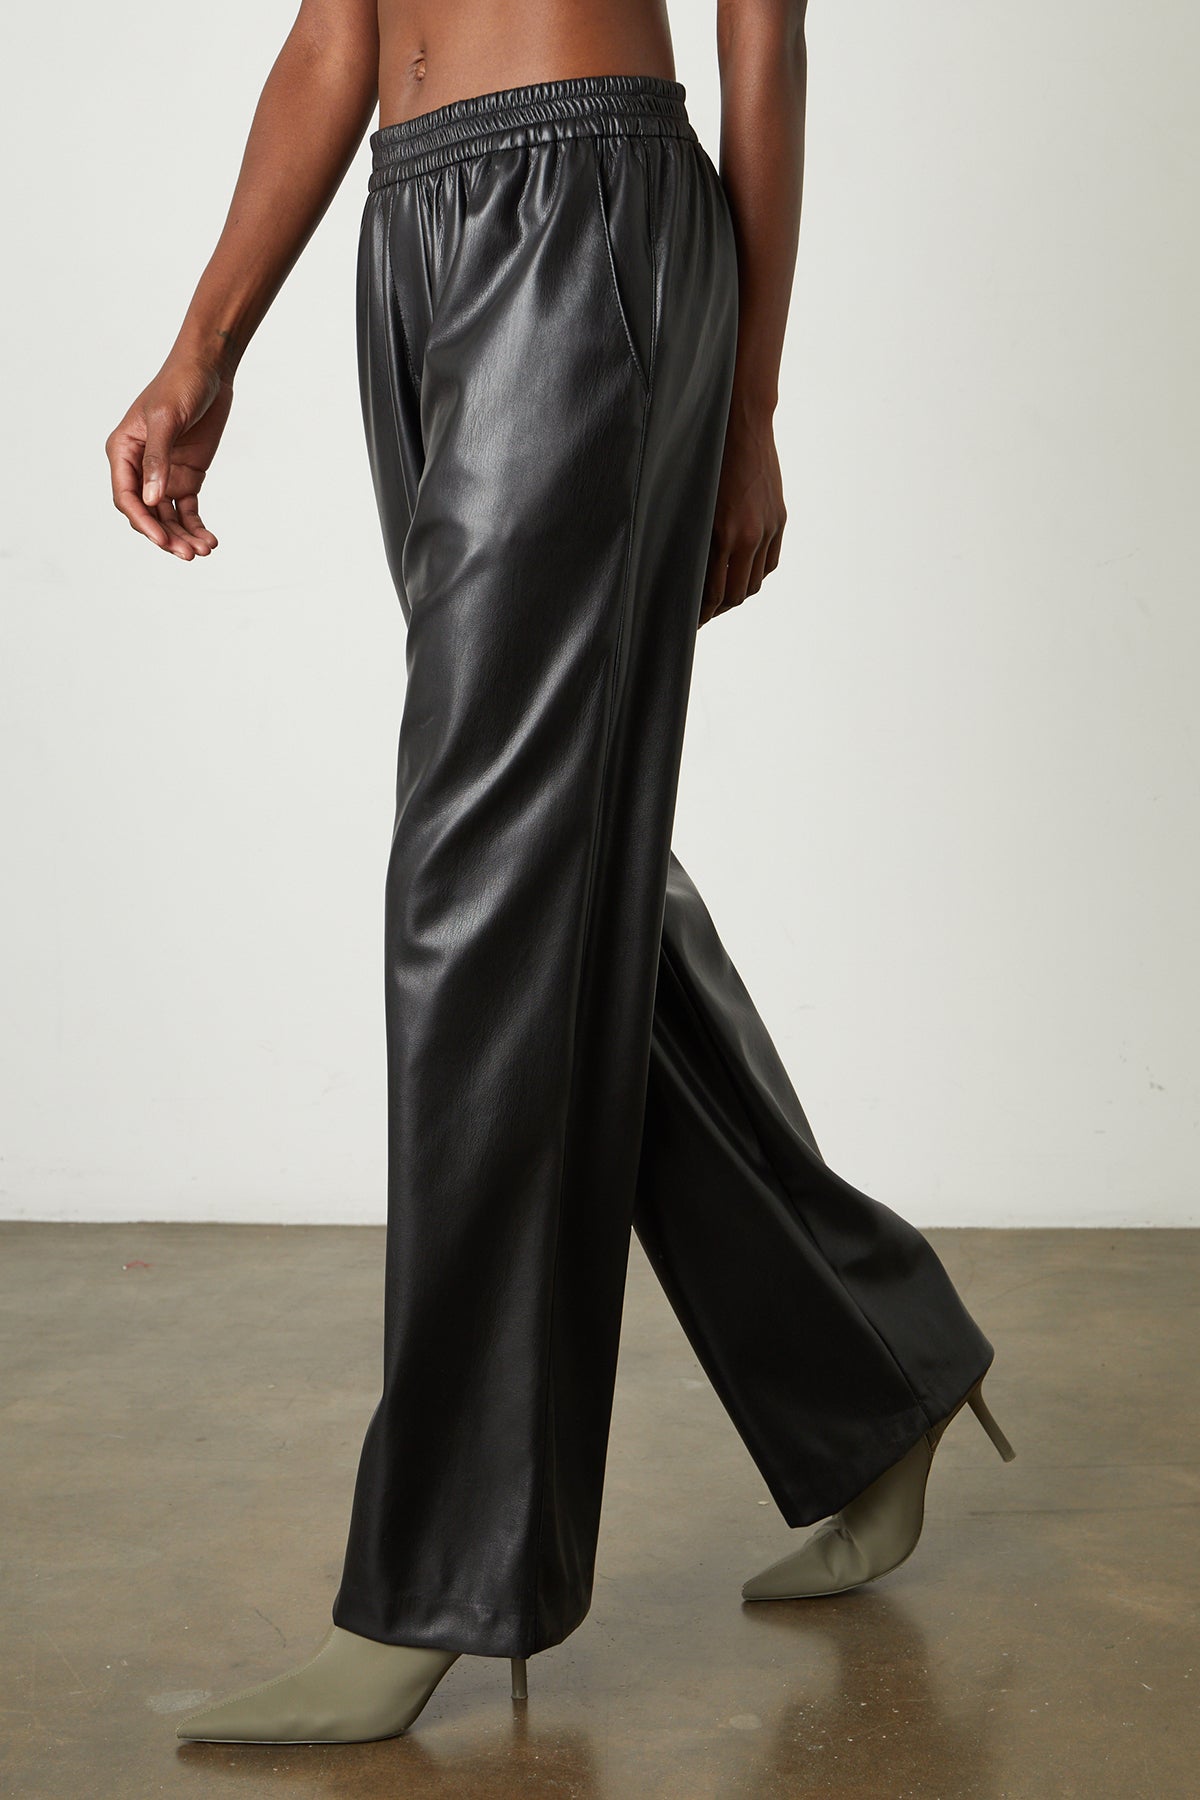 Jenna Vegan Leather Wide Leg Pant in black side-25668843602113